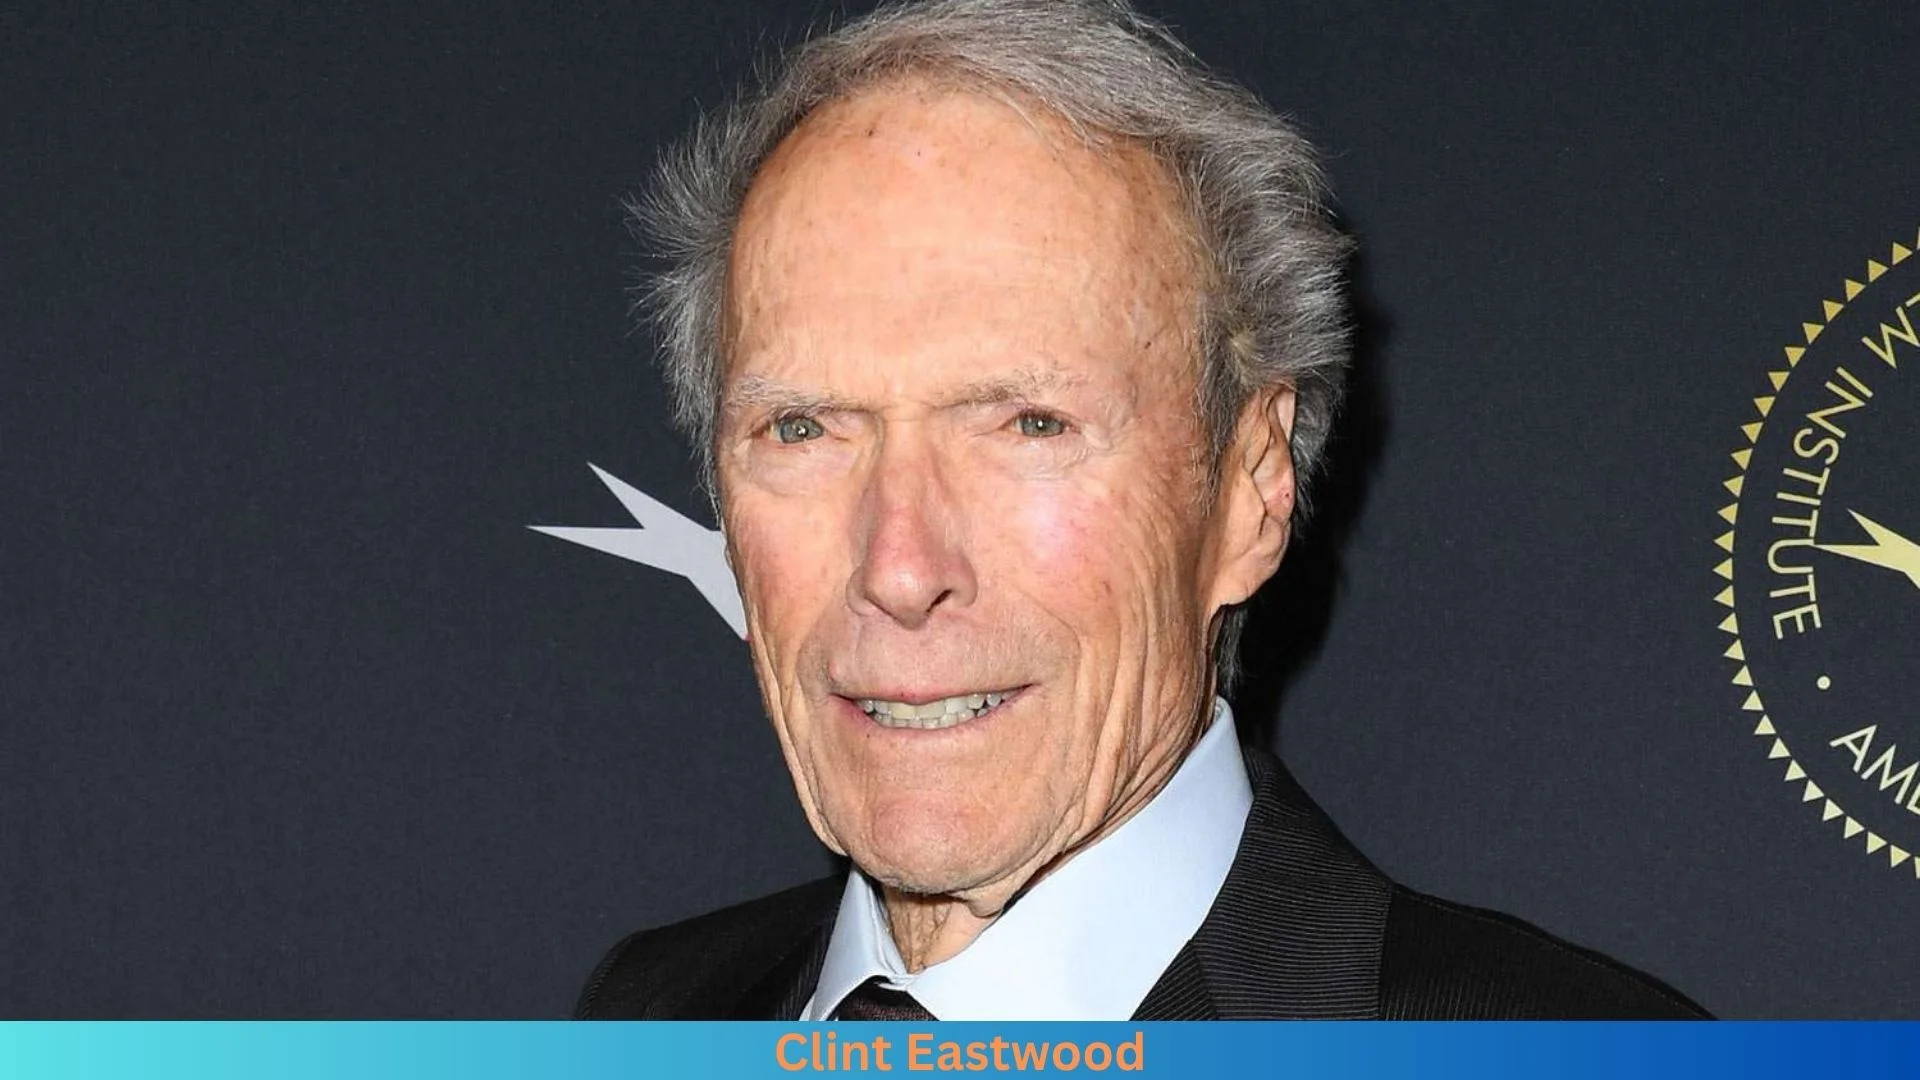 Net Worth of Clint Eastwood